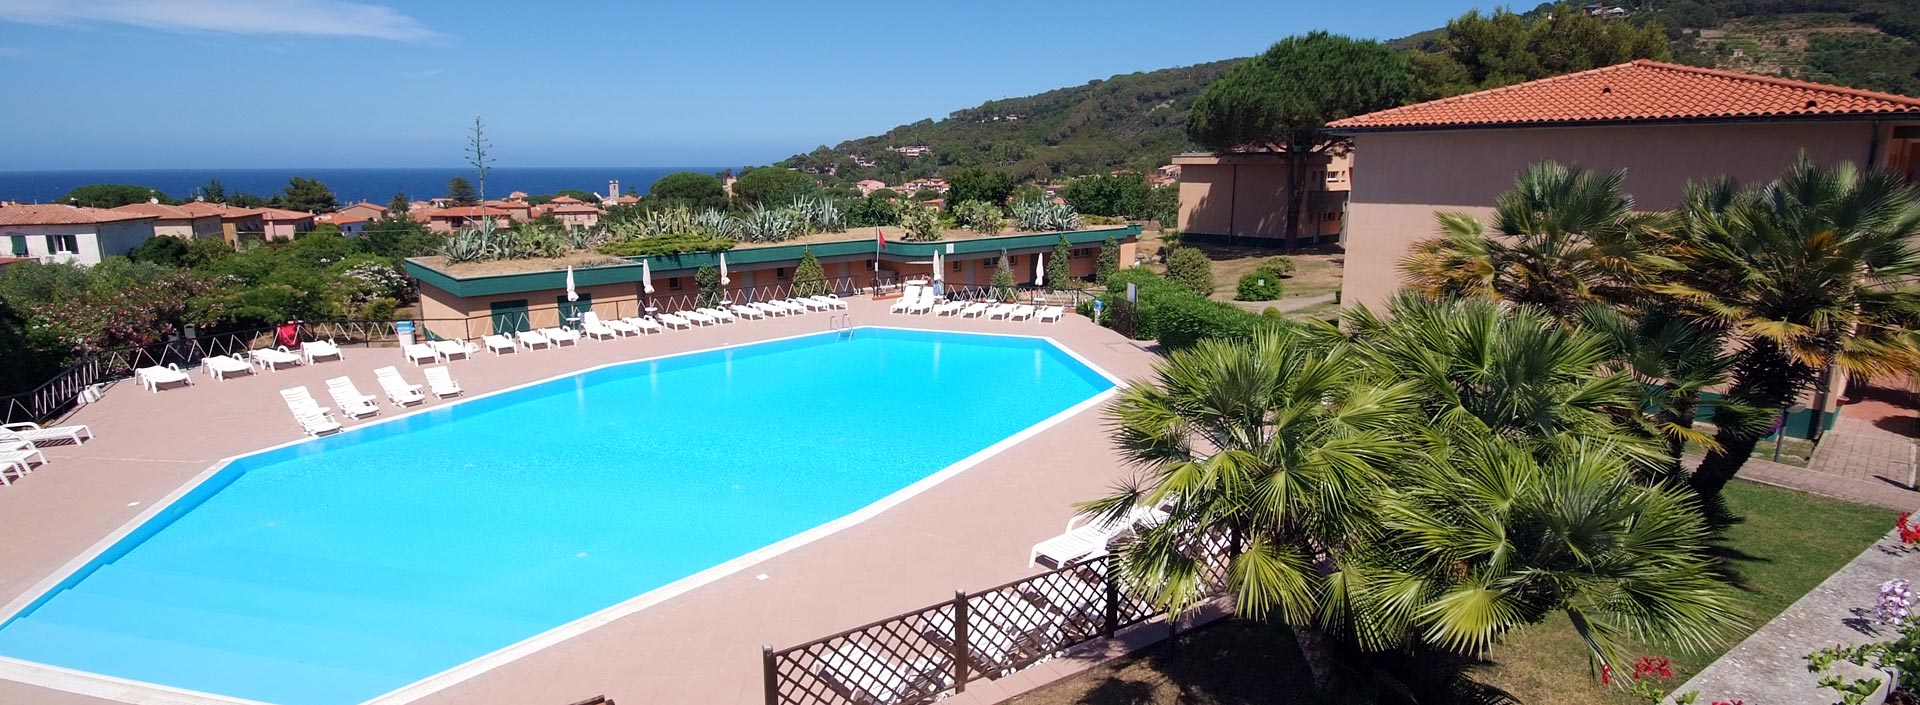 Hotel & Residence on the Island of Elba